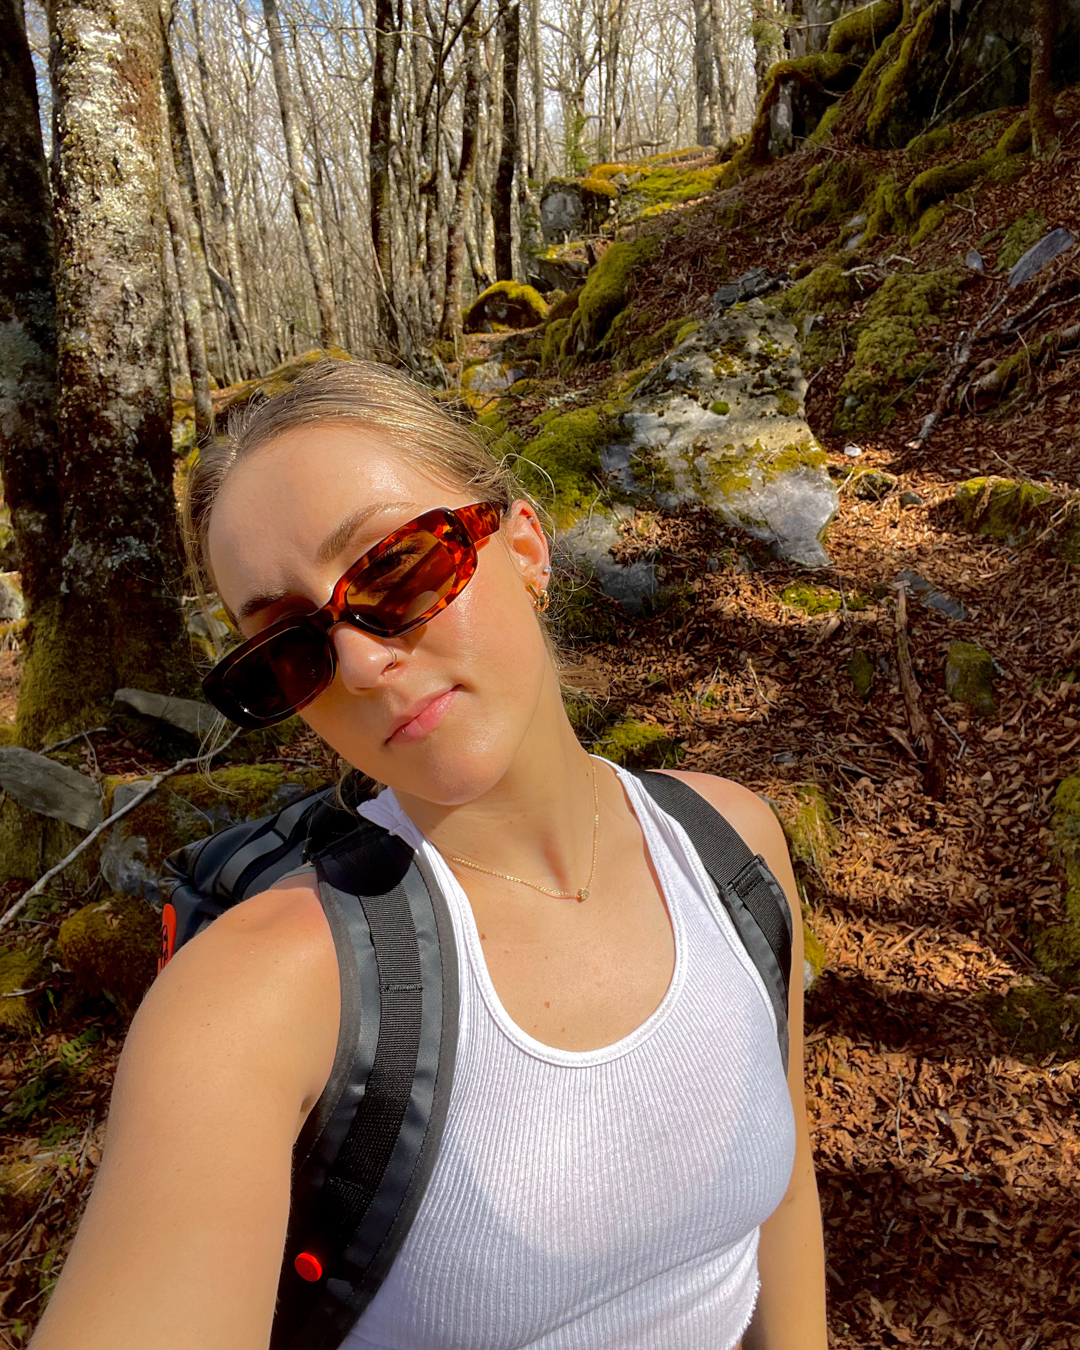 Solo female hiking in Virginia